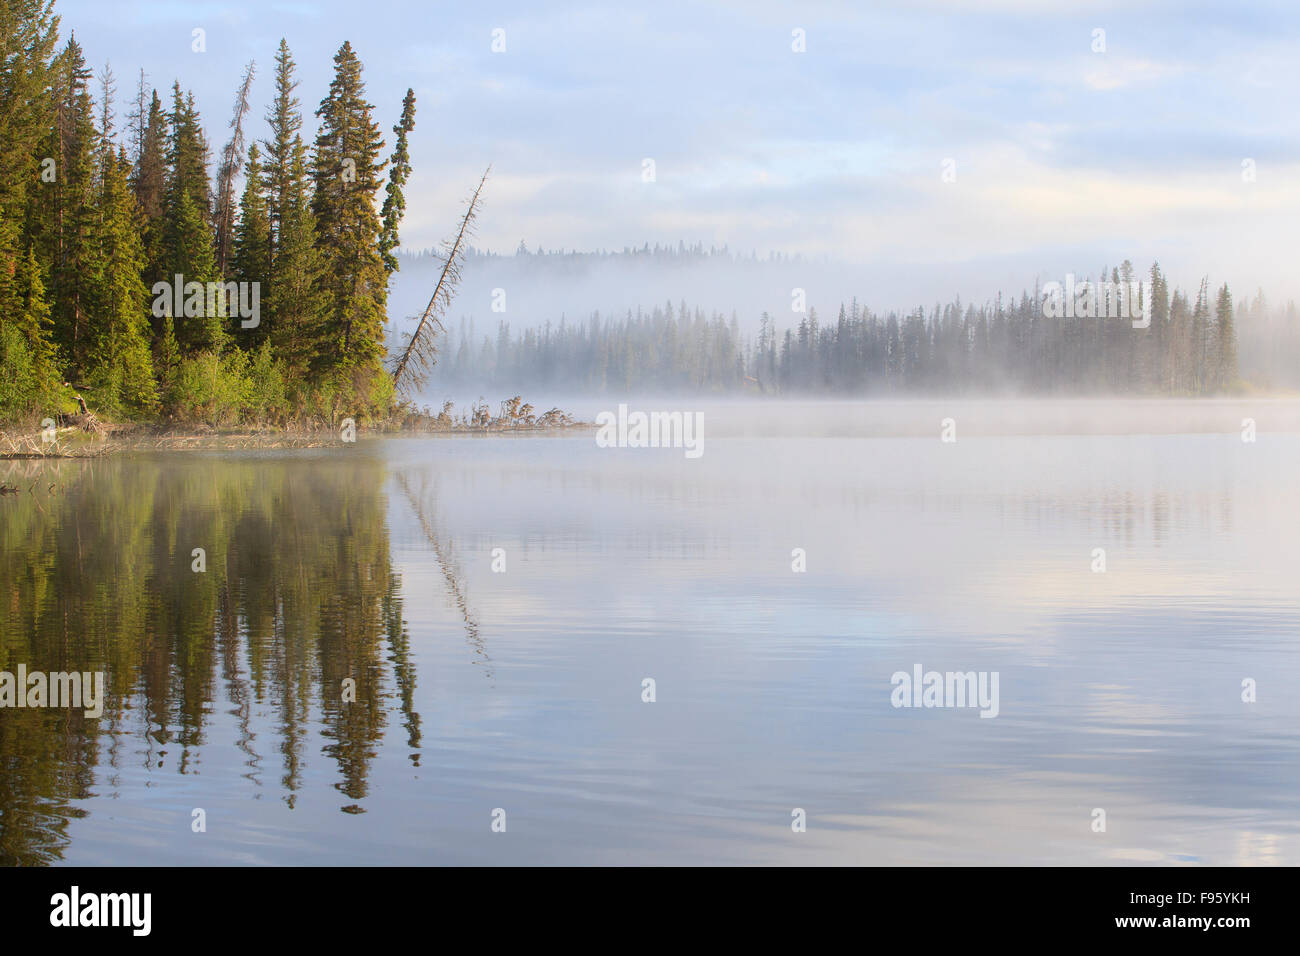 Misty morning, Lac Le Jeune, British Columbia, Canada Stock Photo